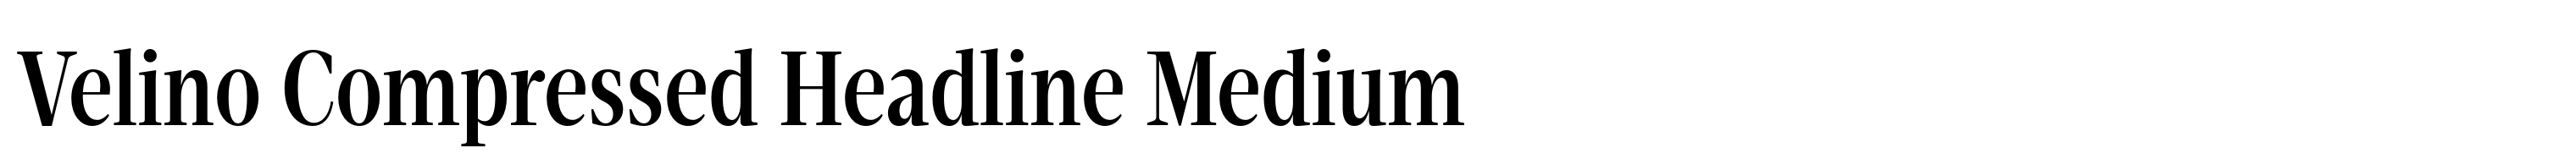 Velino Compressed Headline Medium